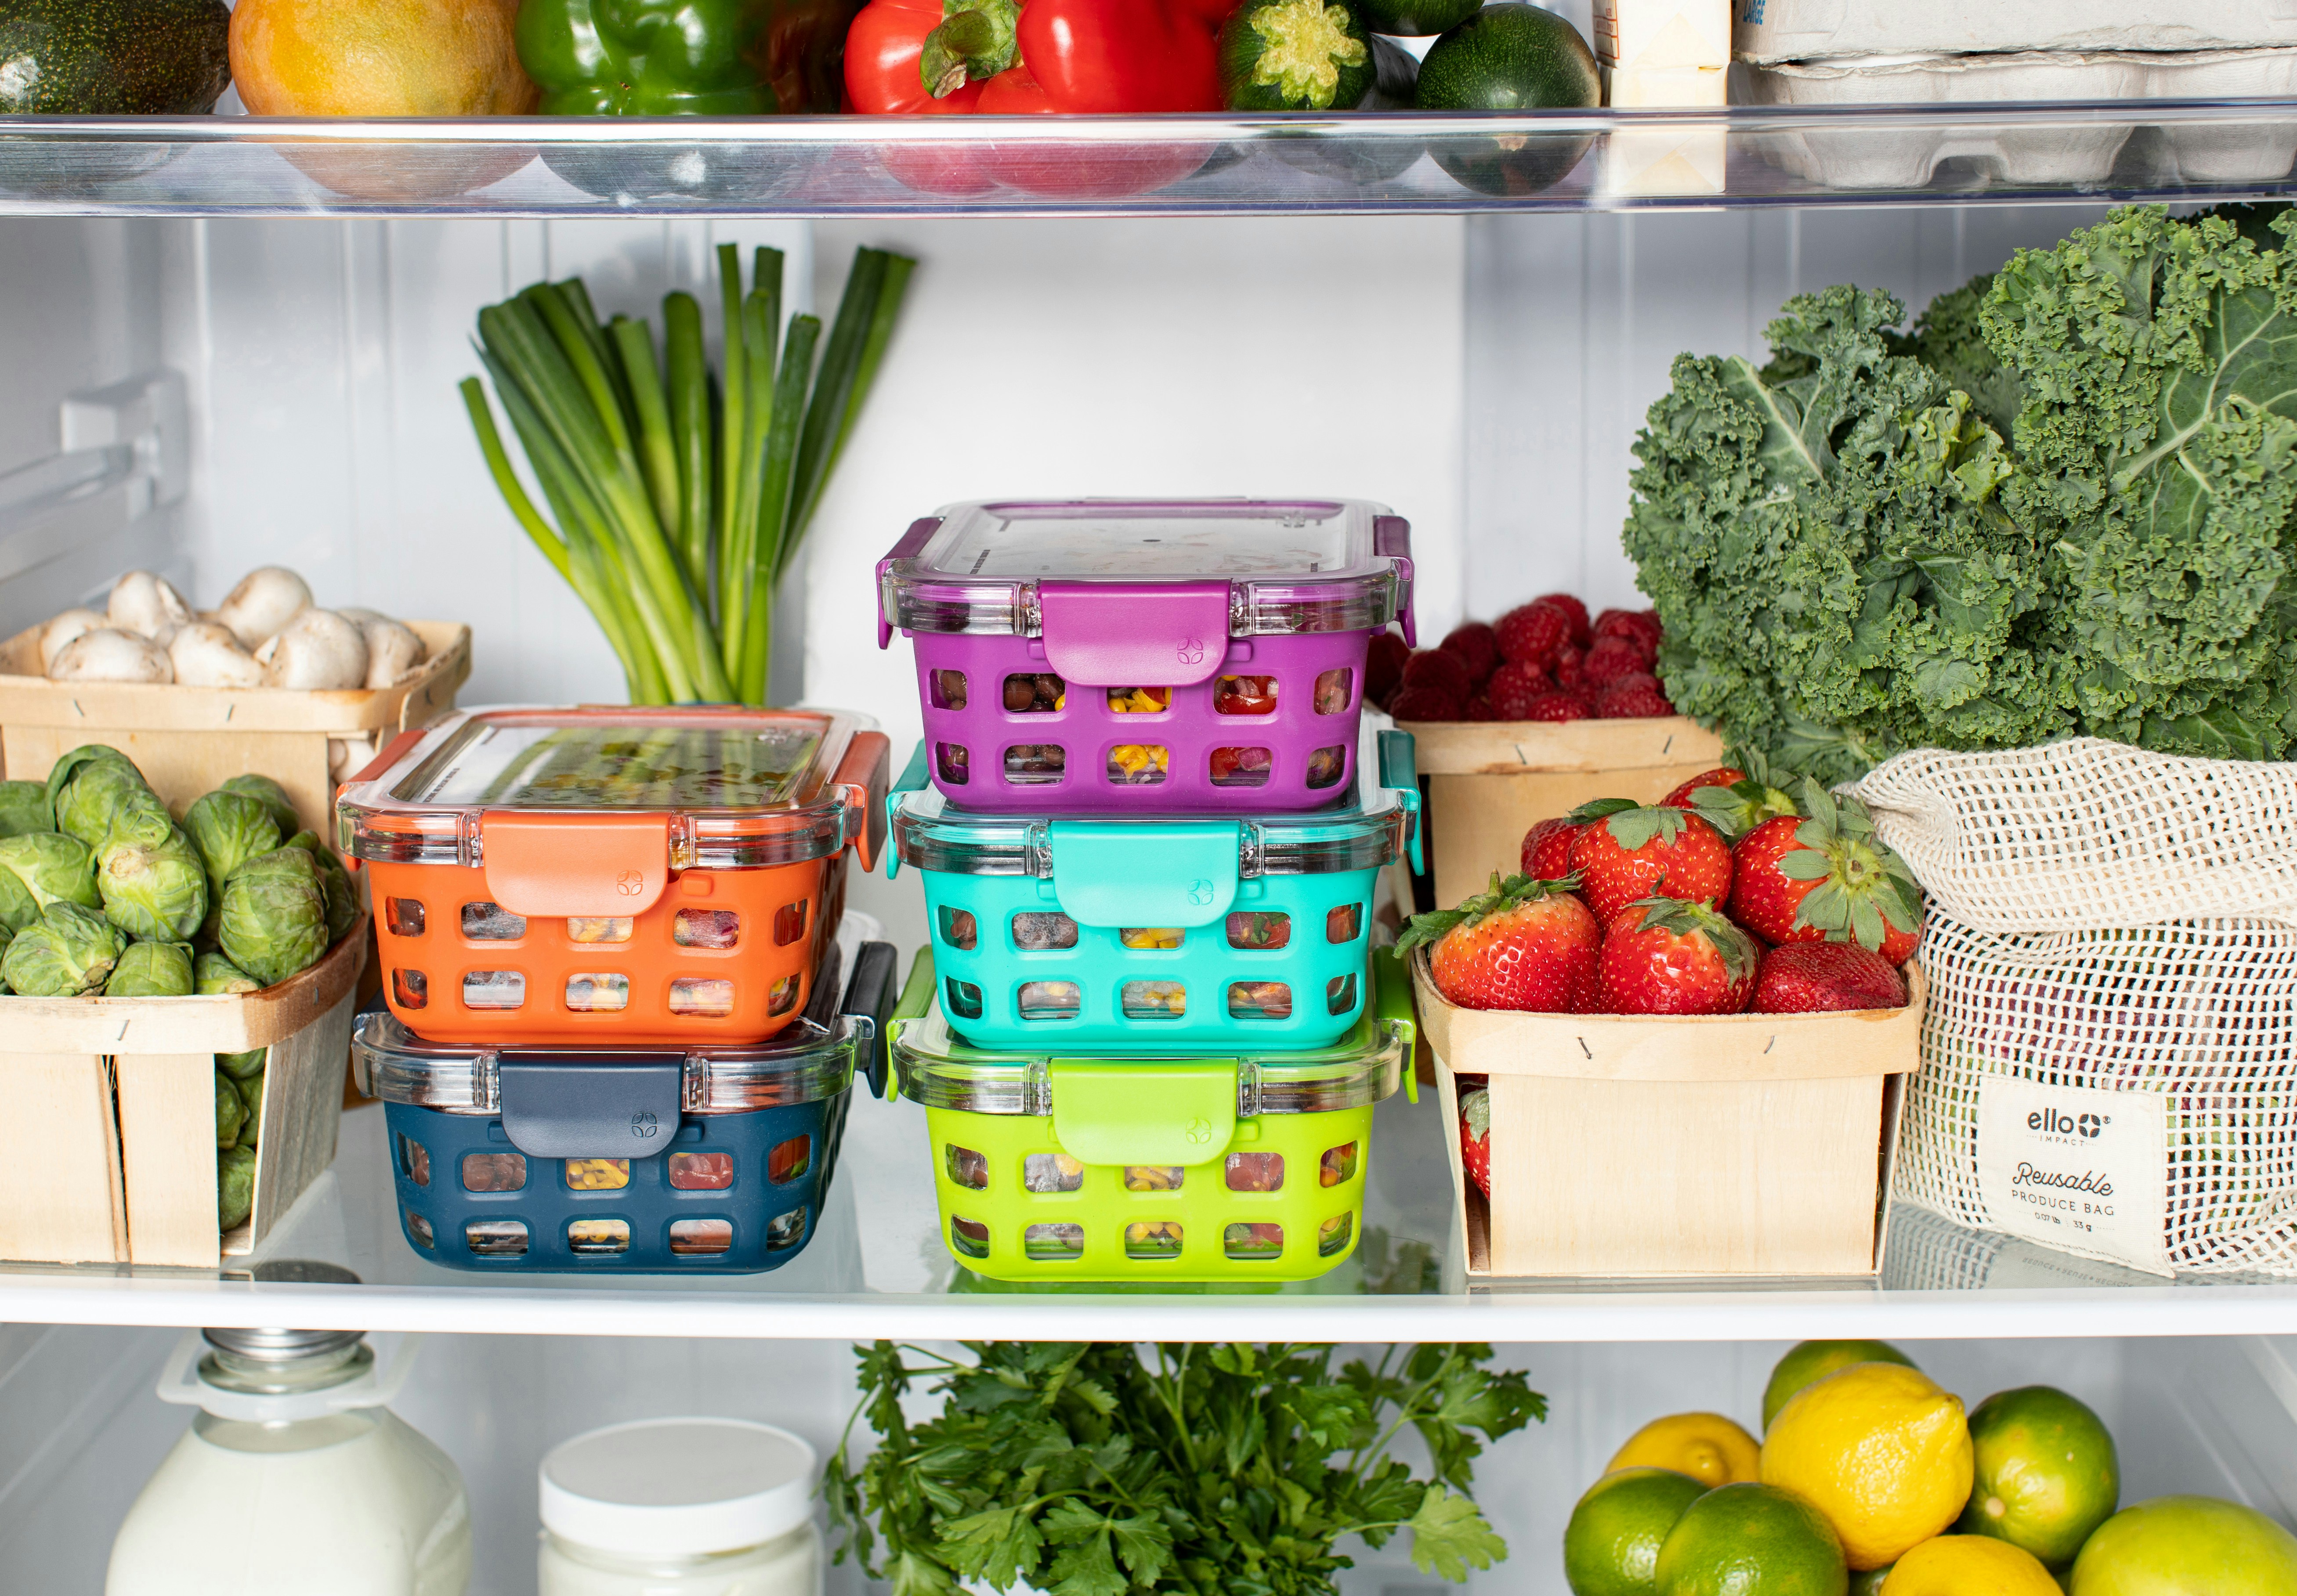 Refrigerator shelves stocked with fresh produce